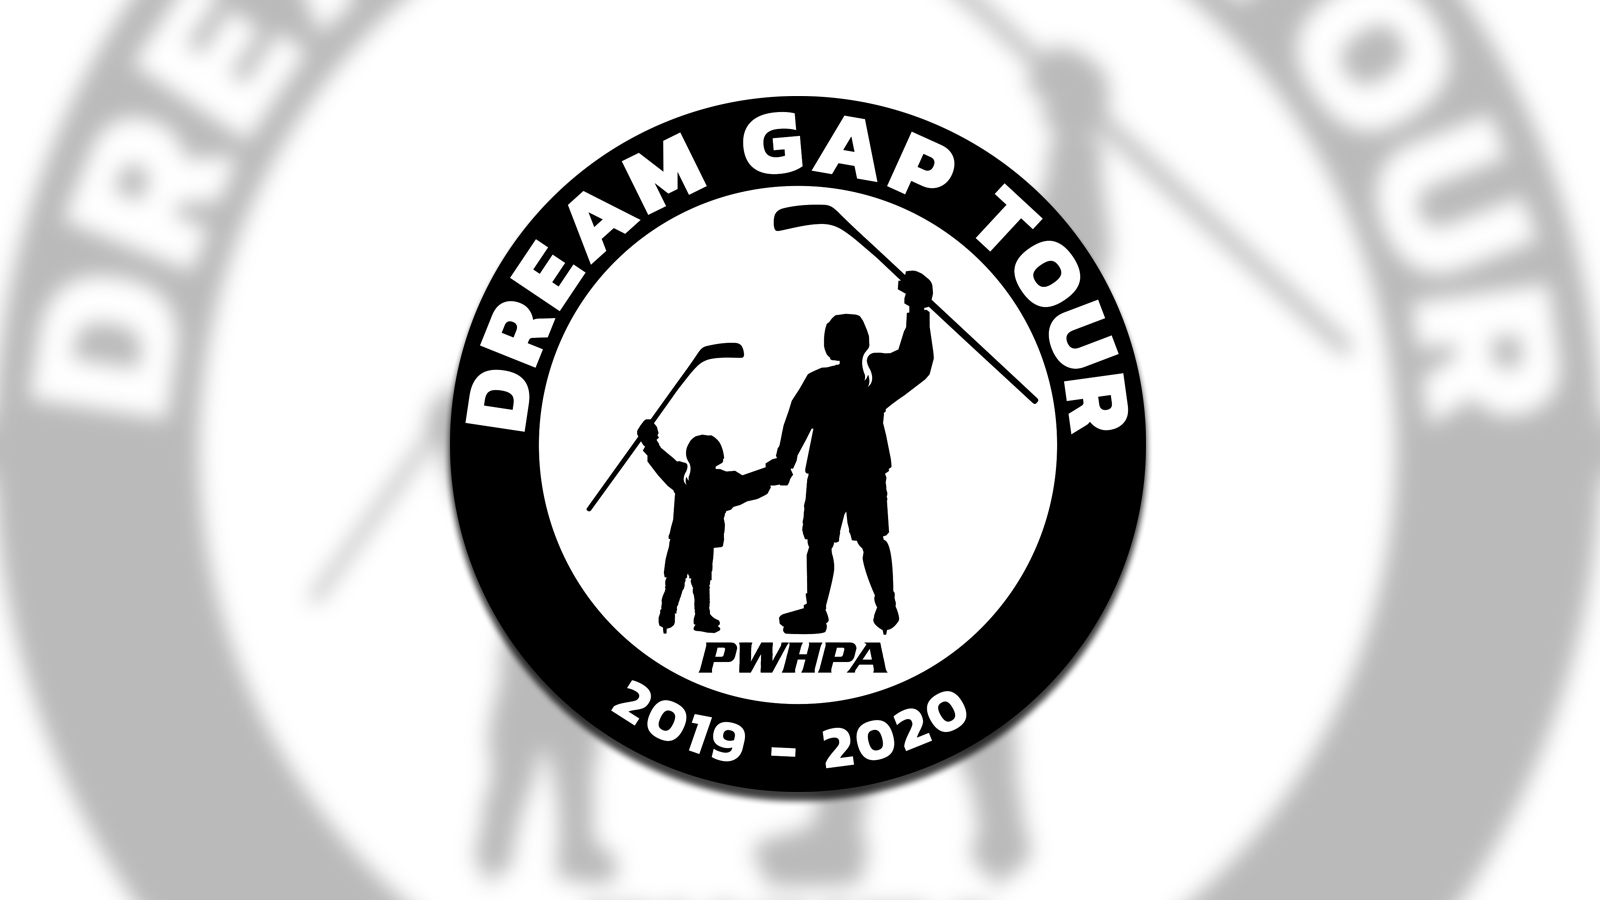 dream gap tour wiki